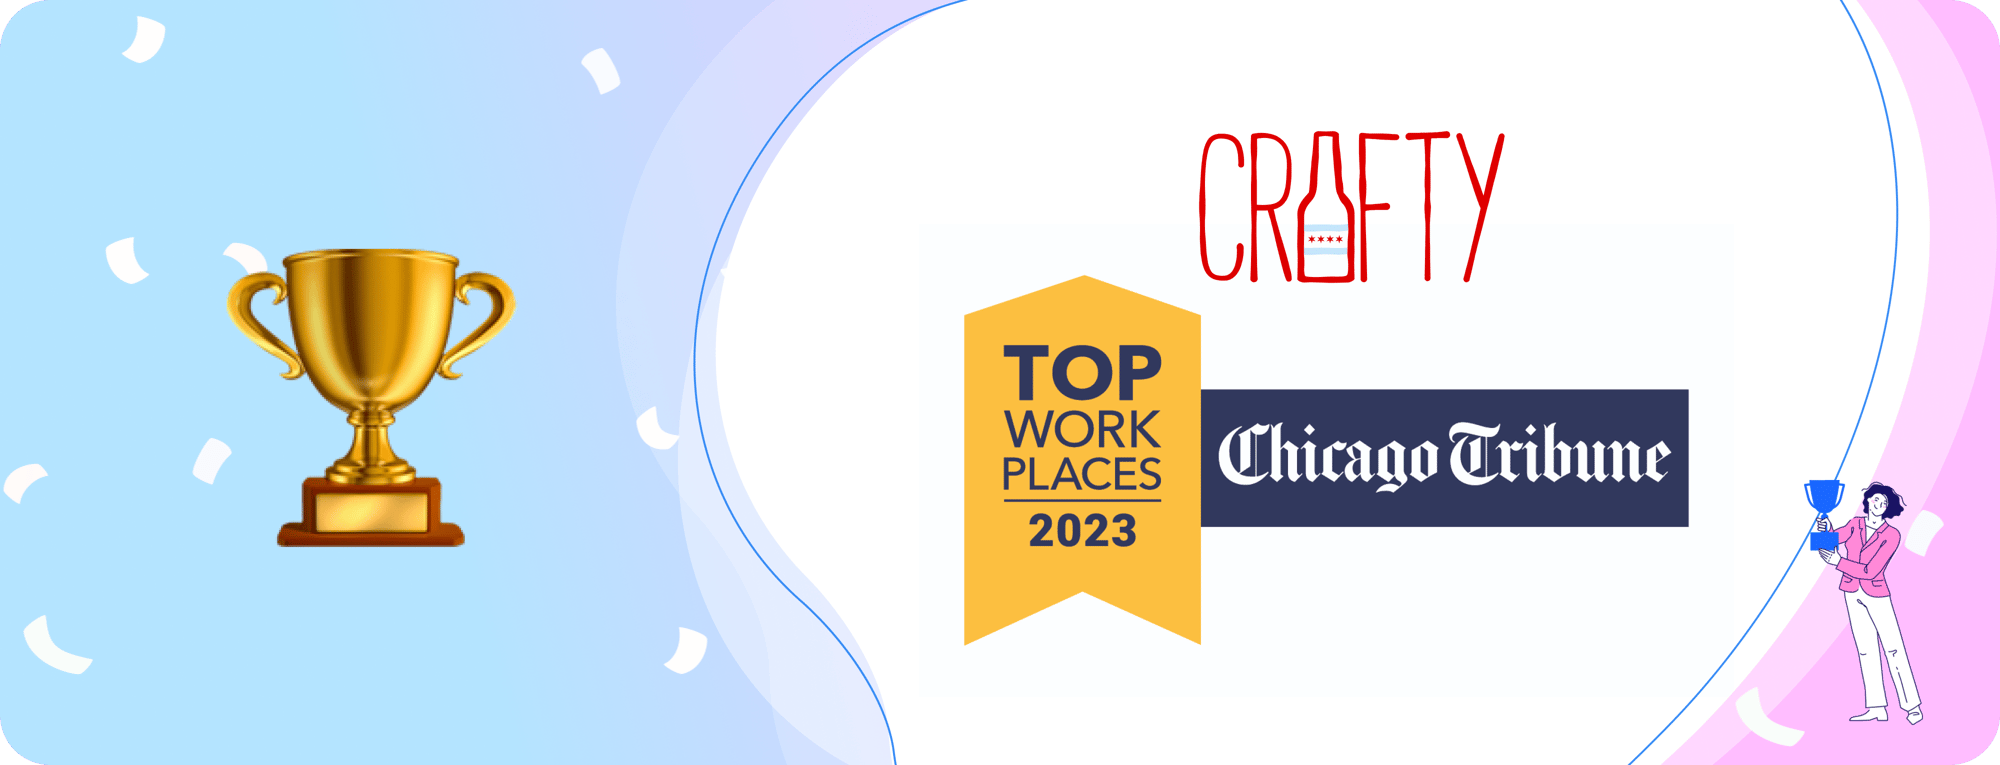 Crafty Chicago Tribune Top Workplace Award 2023